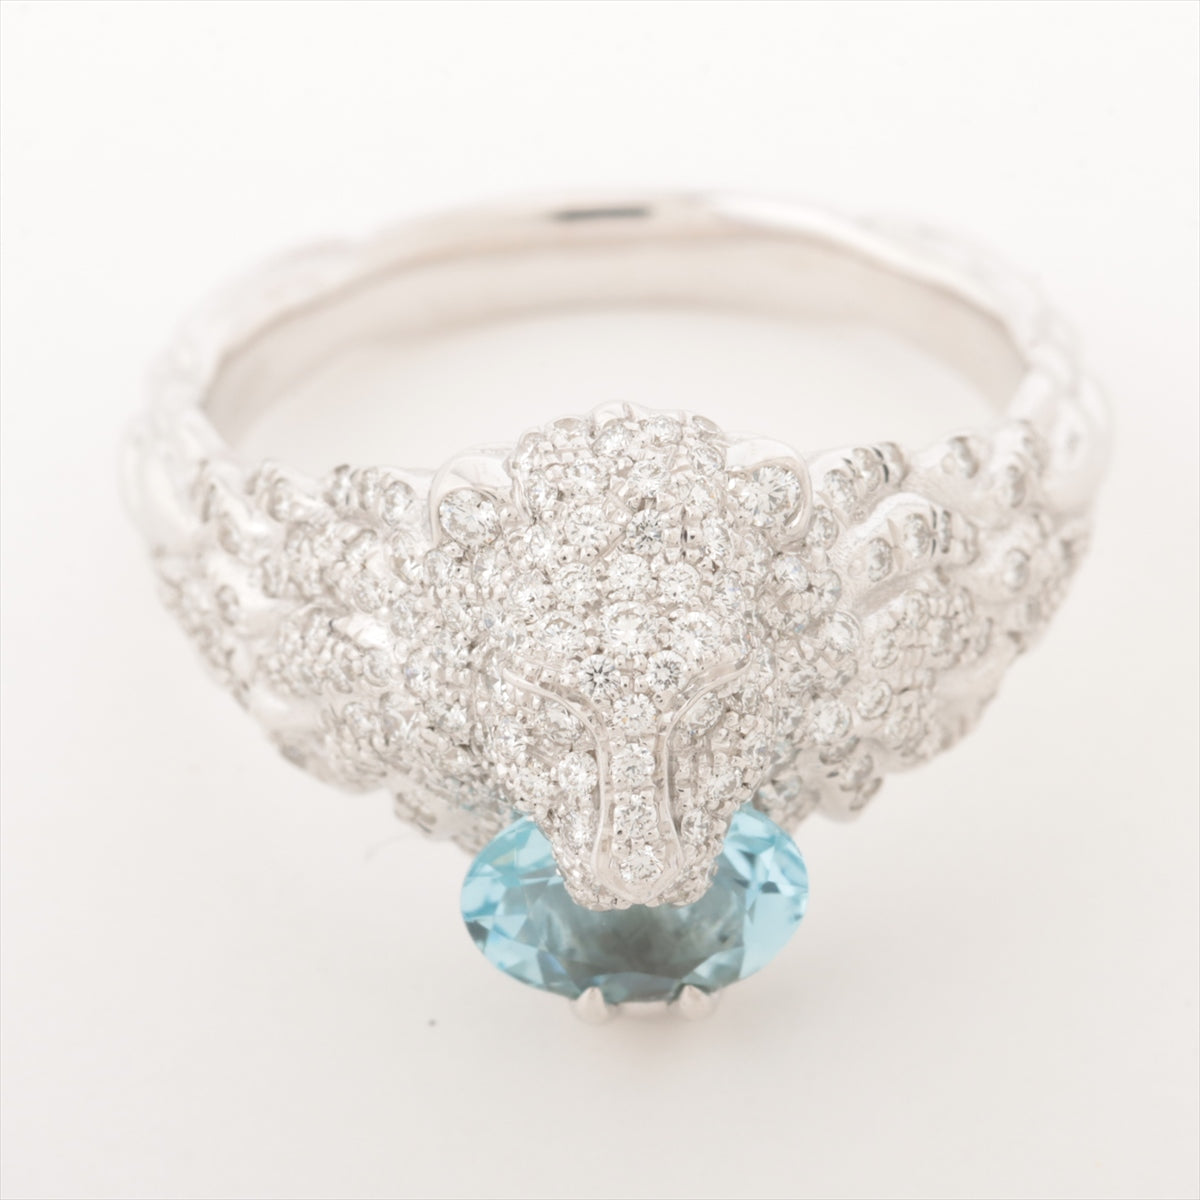 Gucci Lion Head Aquamarine diamond rings 750(WG) 8.8g 14